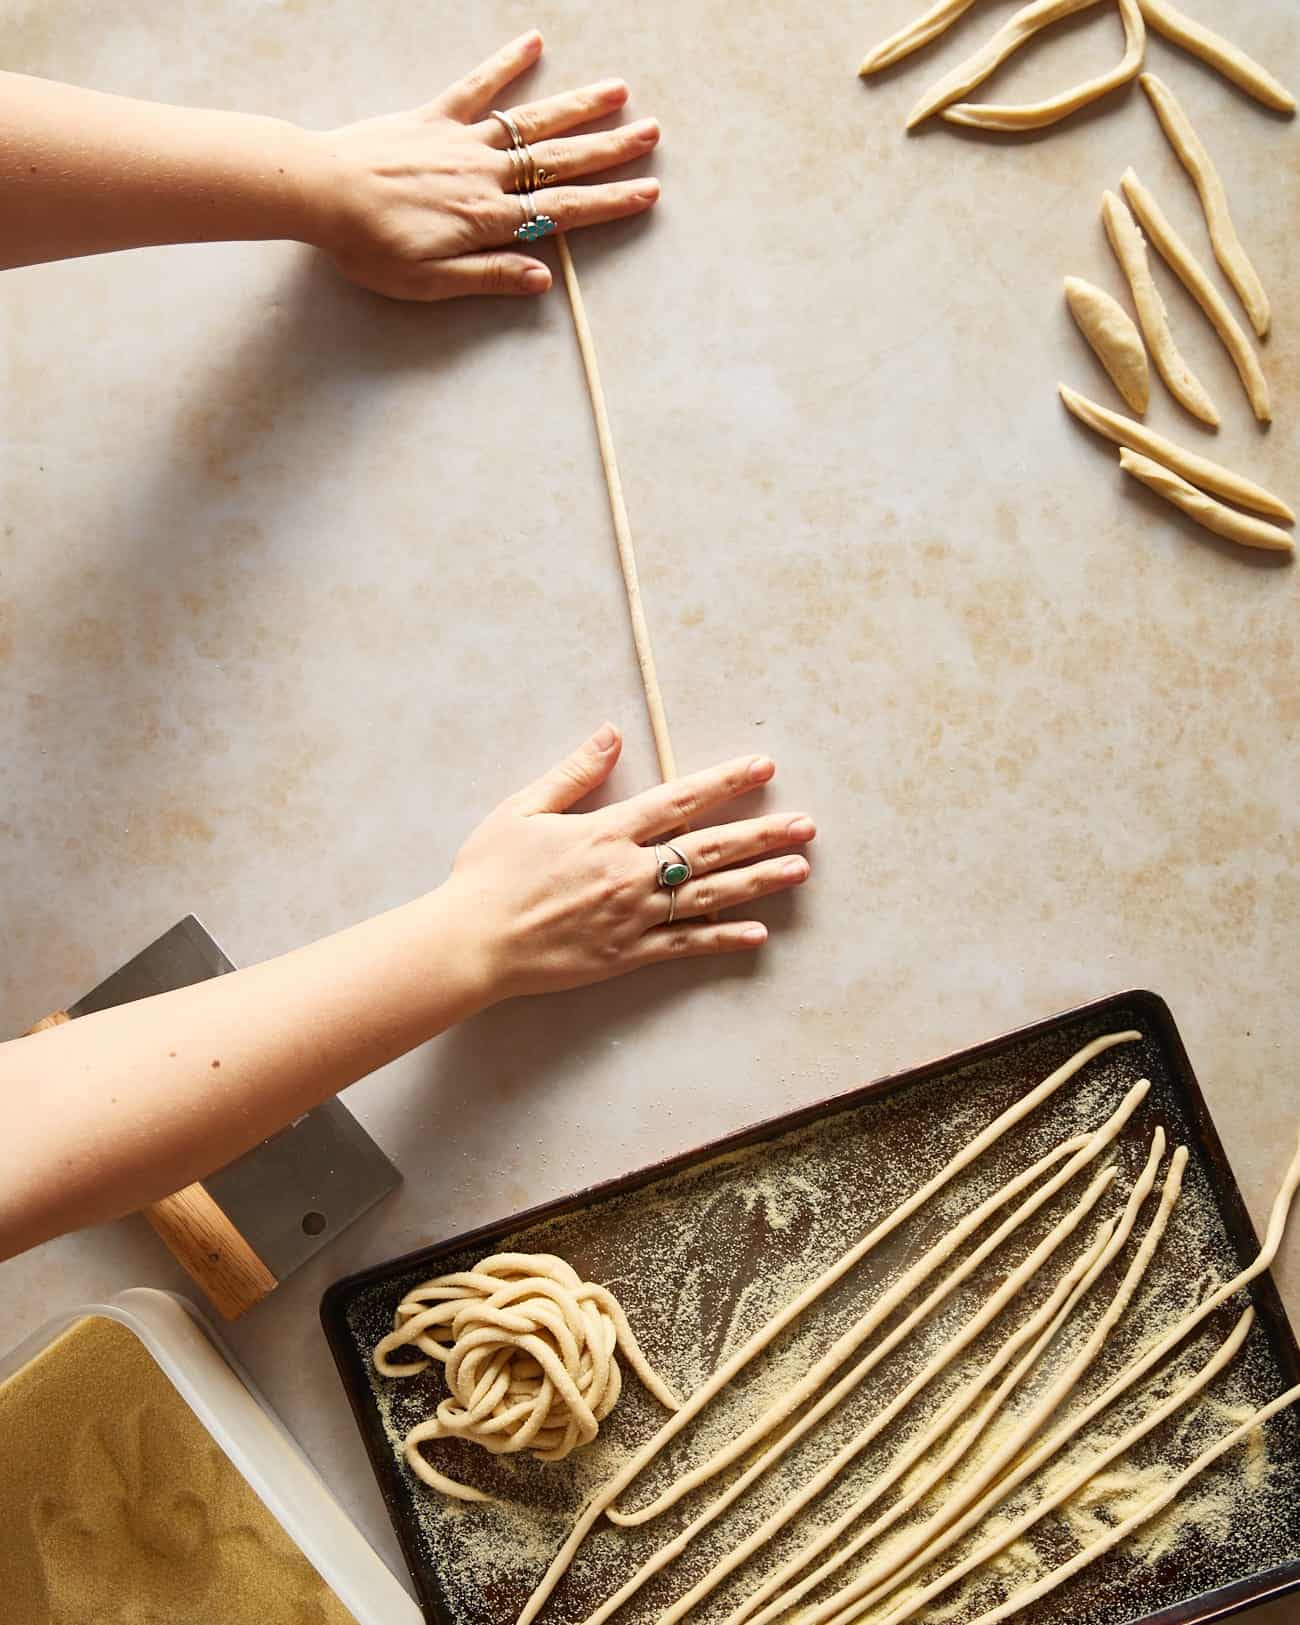 rolling strips of pici dough into worms for cacio e pepe